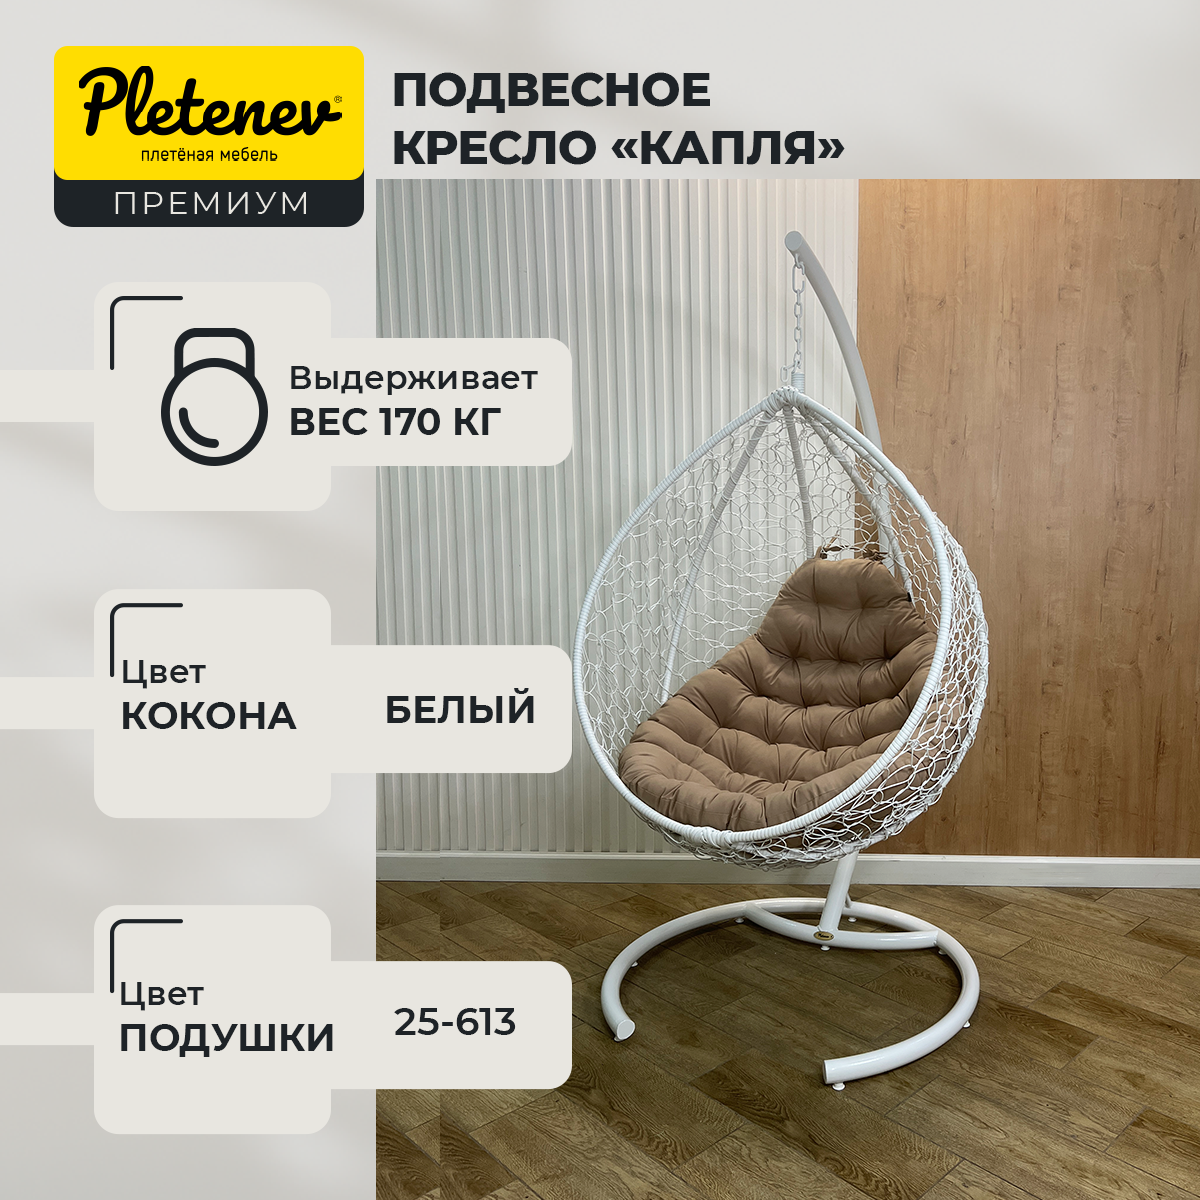 Подвесное кресло-кокон Pletenev "Капля Стандарт"